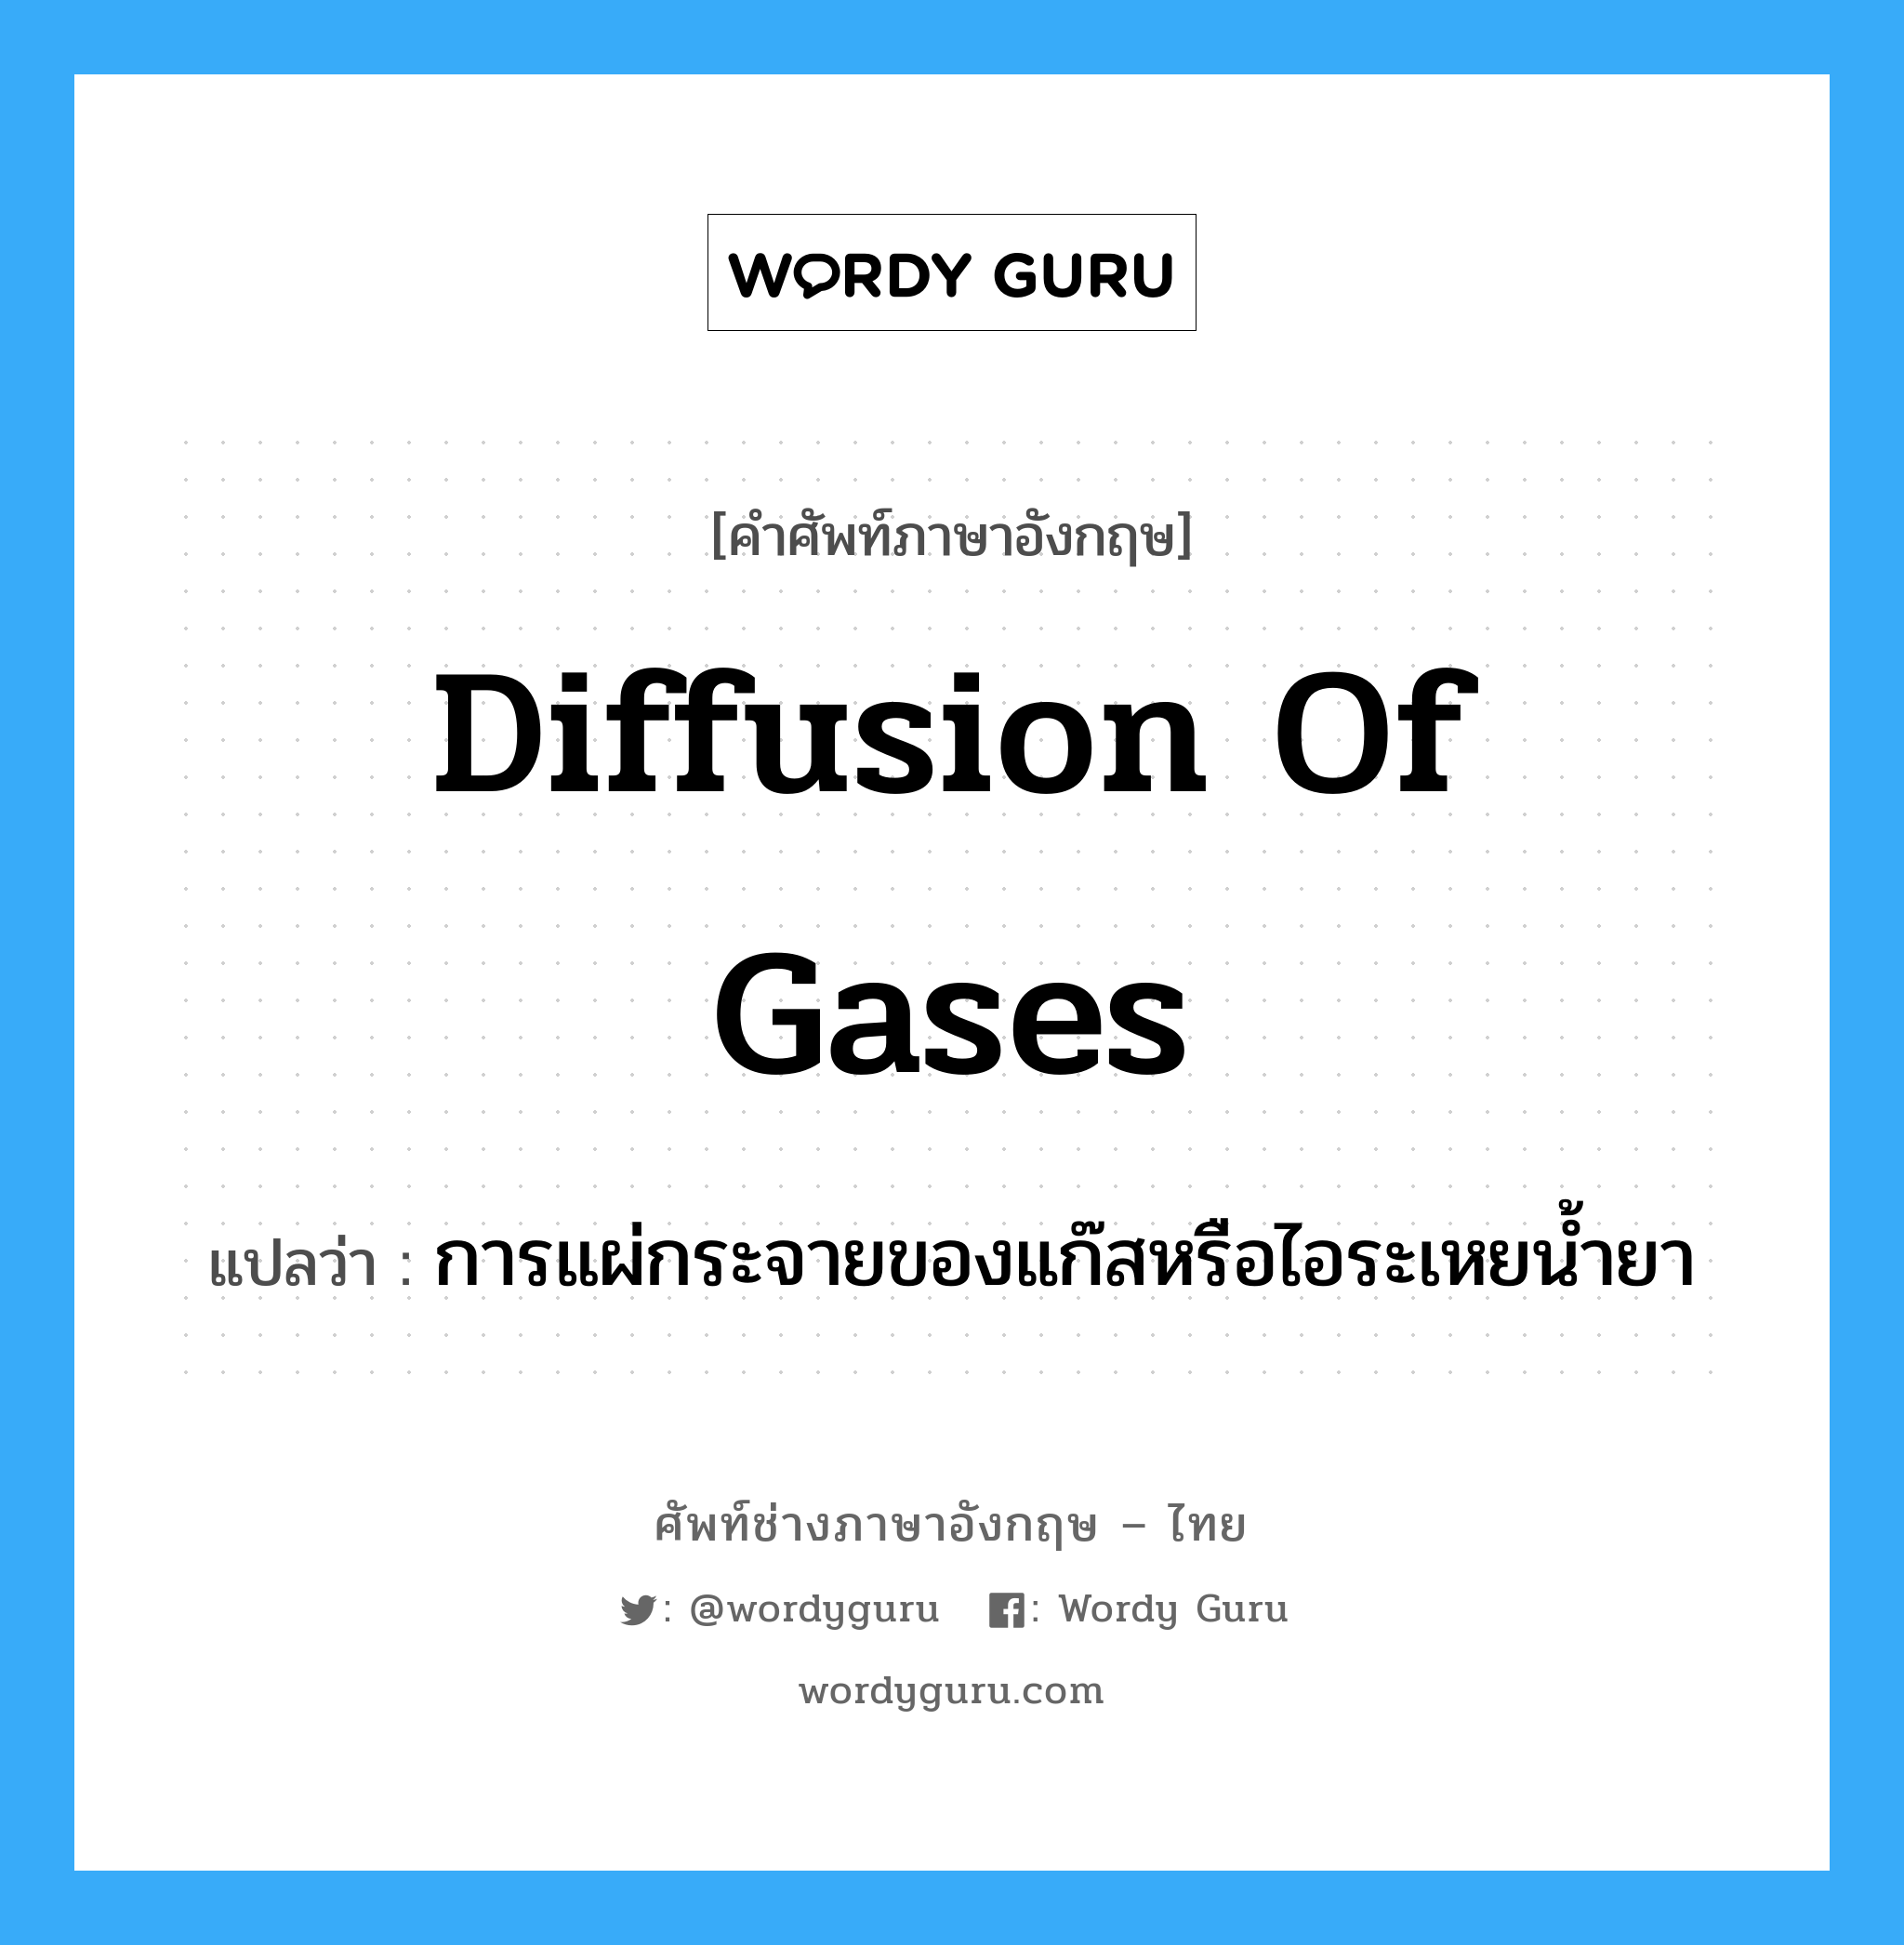 diffusion of gases แปลว่า?, คำศัพท์ช่างภาษาอังกฤษ - ไทย diffusion of gases คำศัพท์ภาษาอังกฤษ diffusion of gases แปลว่า การแผ่กระจายของแก๊สหรือไอระเหยน้ำยา